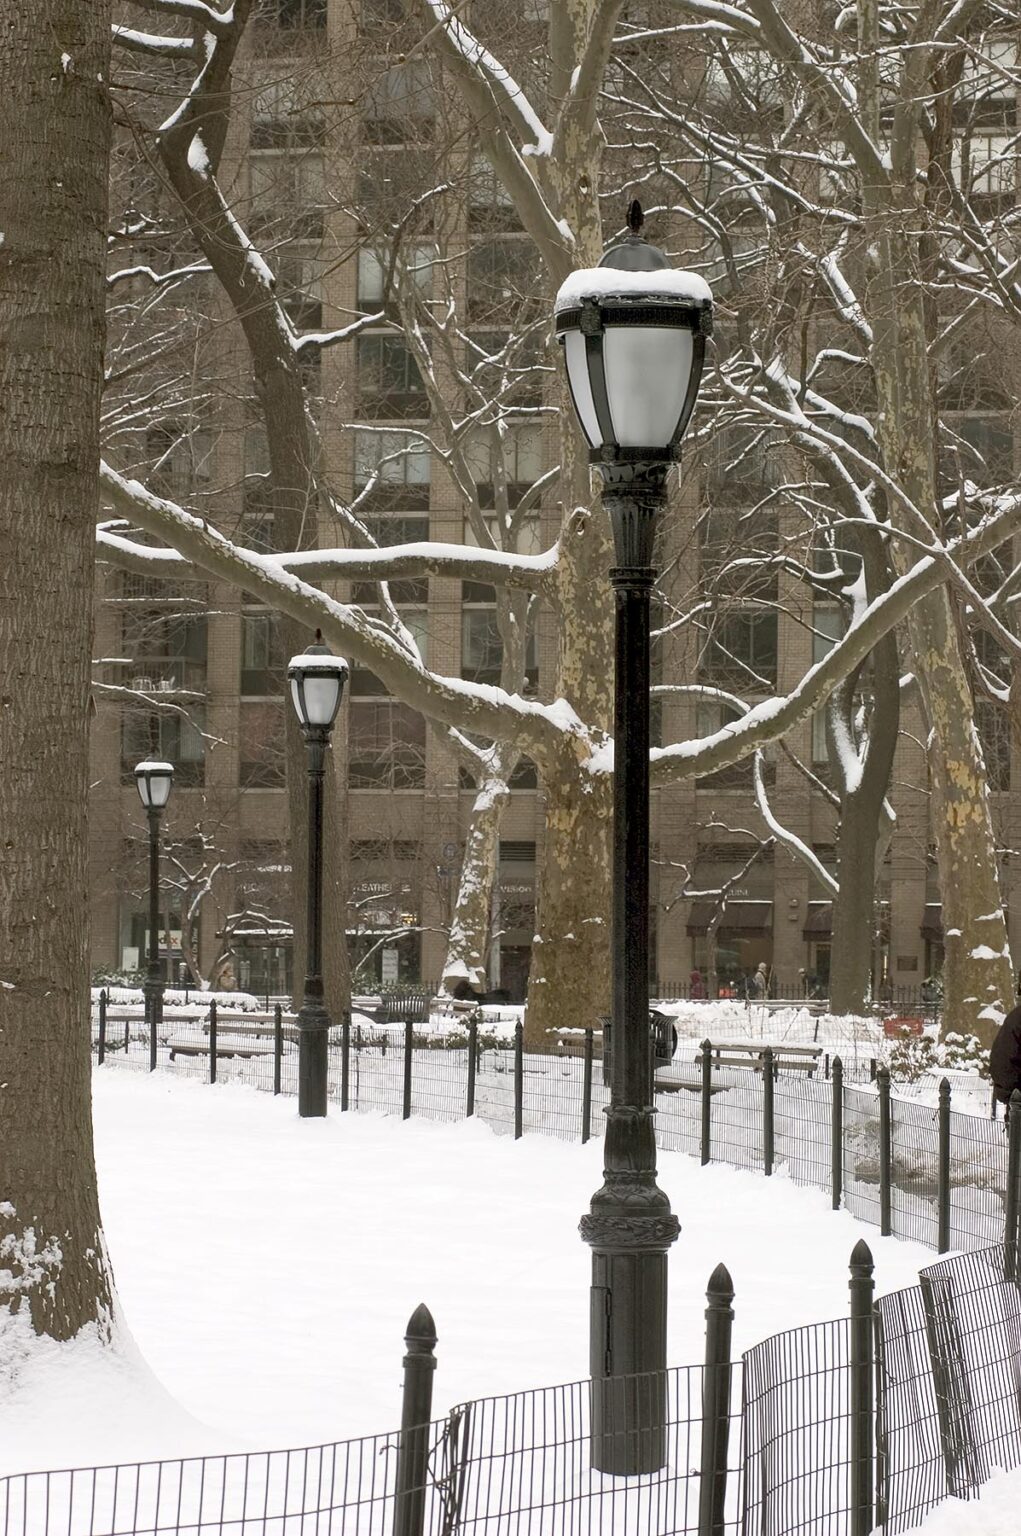 Freshly fallen virgin SNOW covers TREES & LAMPPOSTS in a MANHATTAN community PARK - NEW YORK, NEW YORK, USA